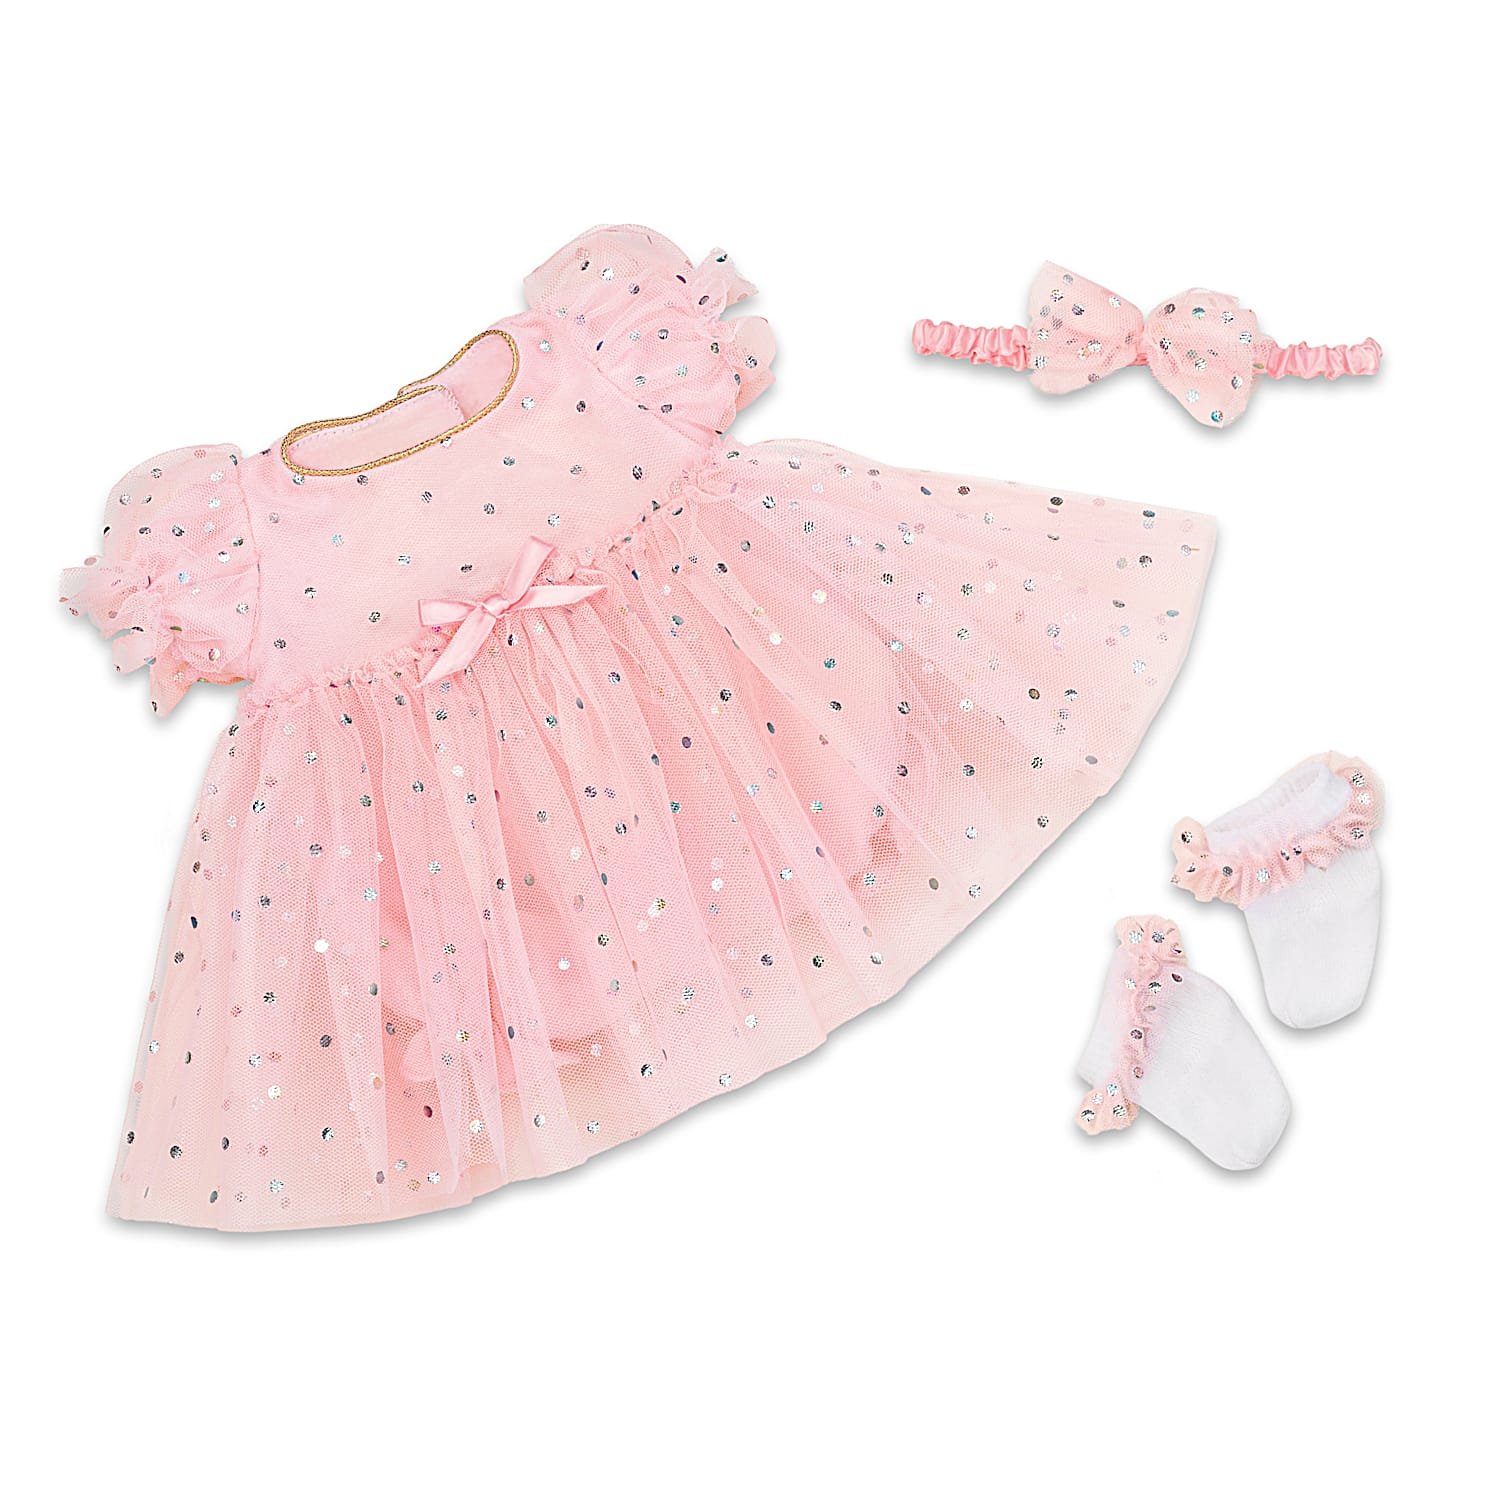 Celebration Dress Baby Doll Accessory Set With Metallic Dots